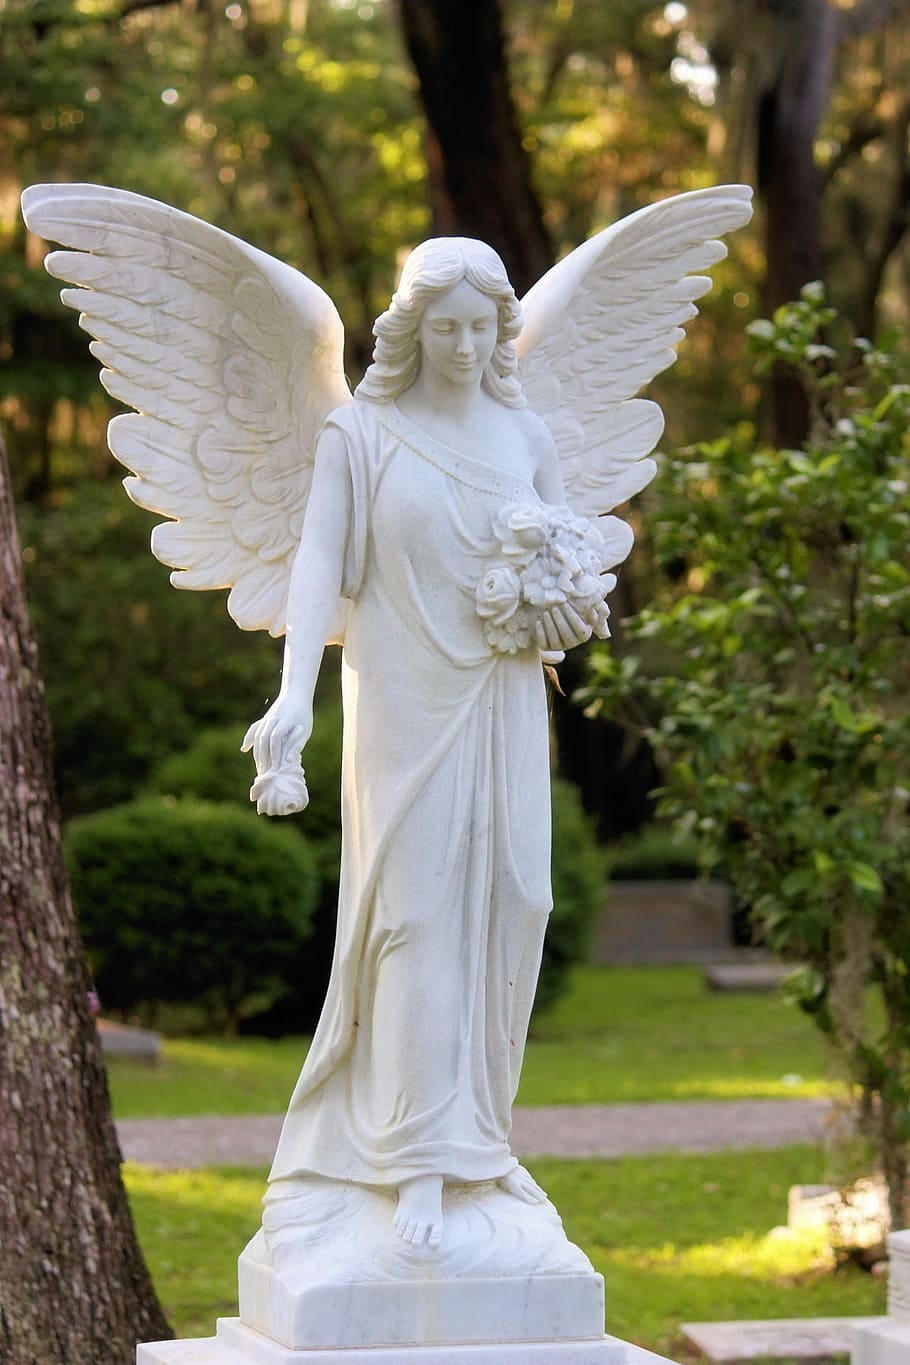 hembra, estatua del ángel, jardín, ángel, alas, cementerio, pacífica, tumba, árboles, naturaleza